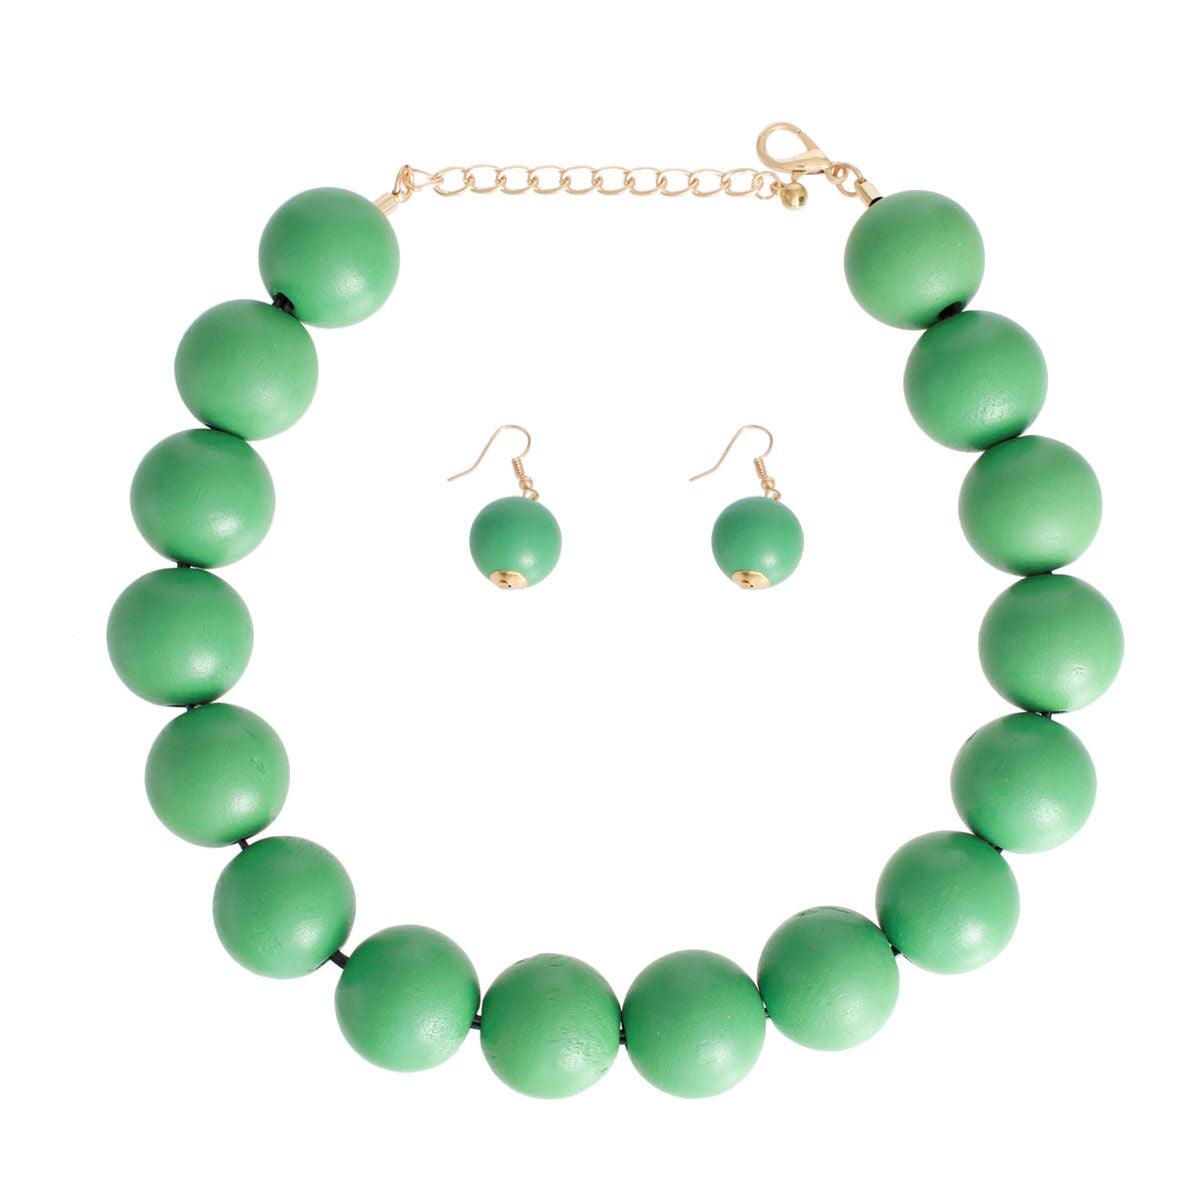 Green-envy Bead Necklace Set: Shop Now